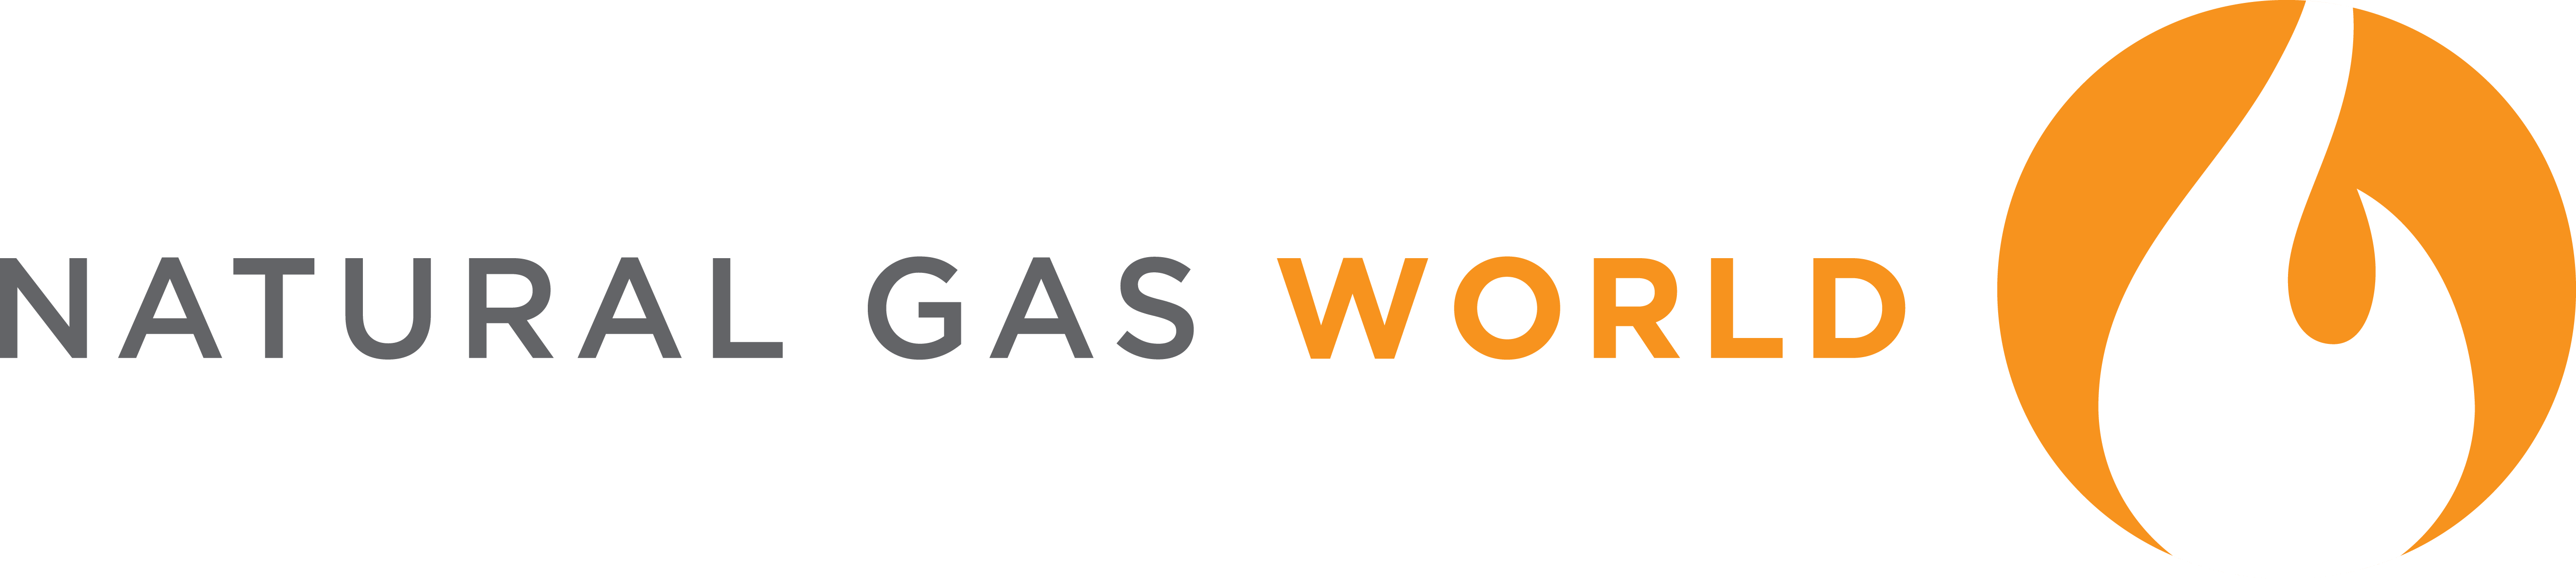 Natural Gas World logo